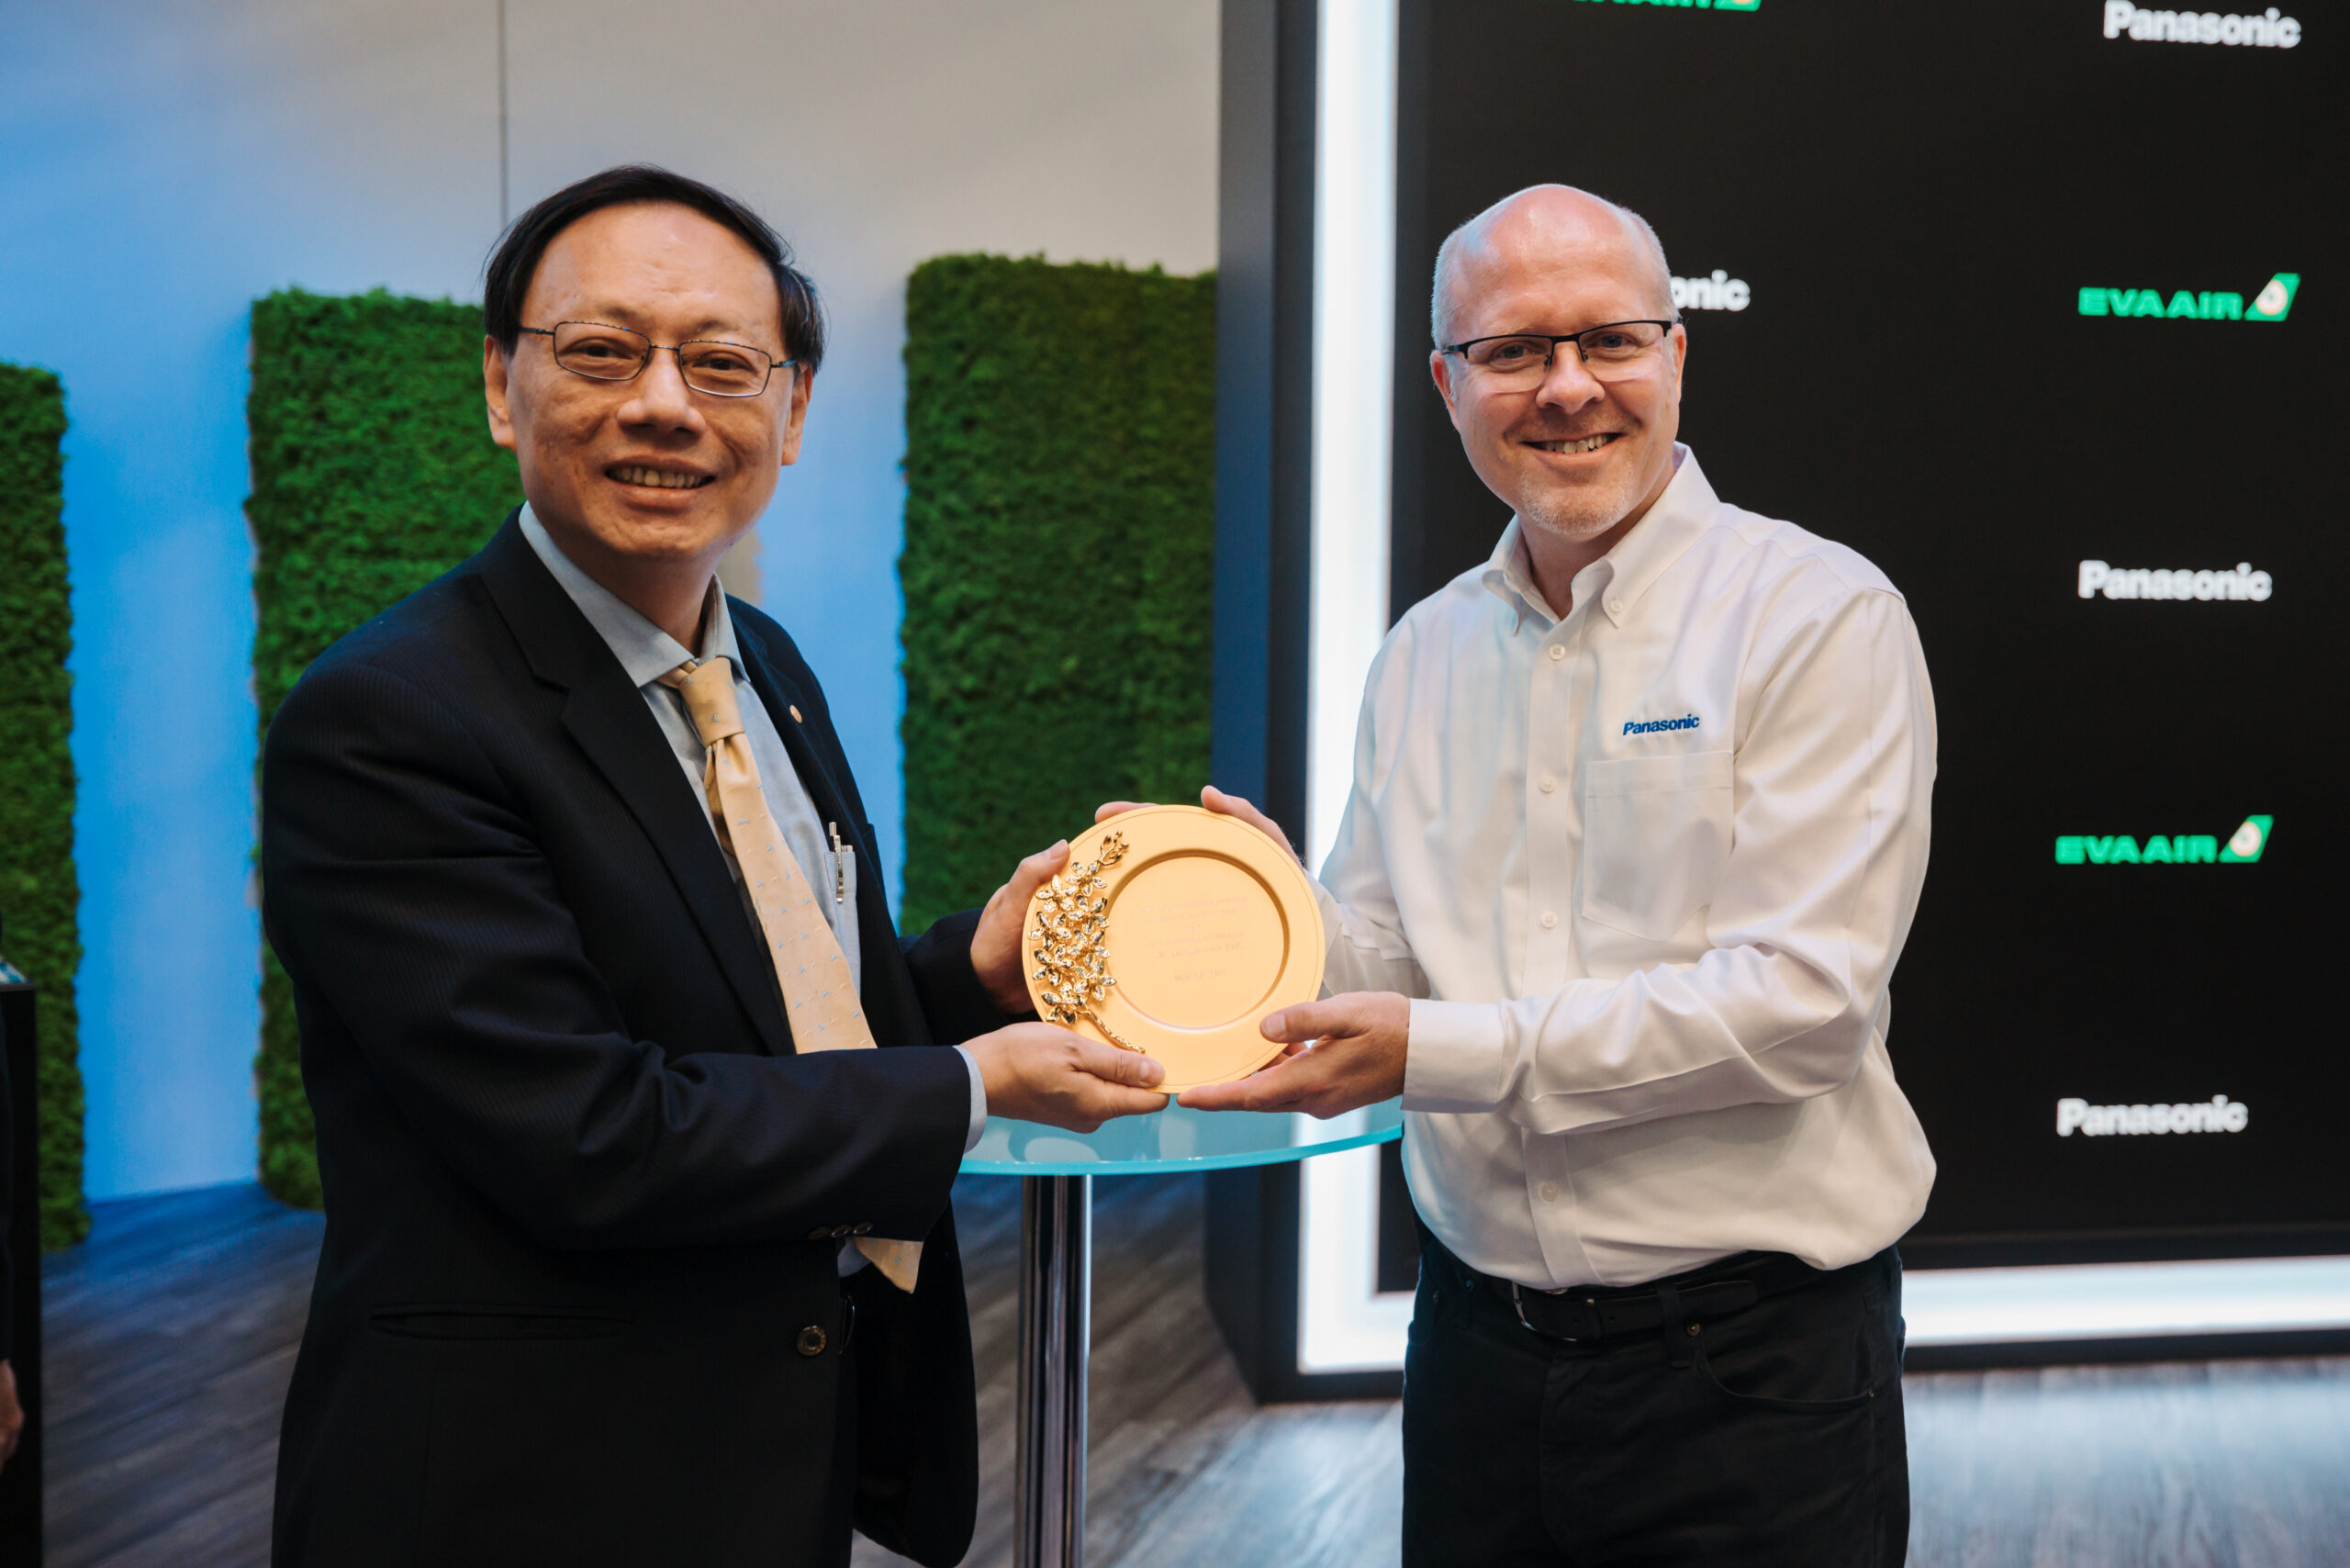 Victor Chiang, Vice President, Corporate Planning Division, EVA Air and Ken Sain, Chief Executive Officer, Panasonic Avionics